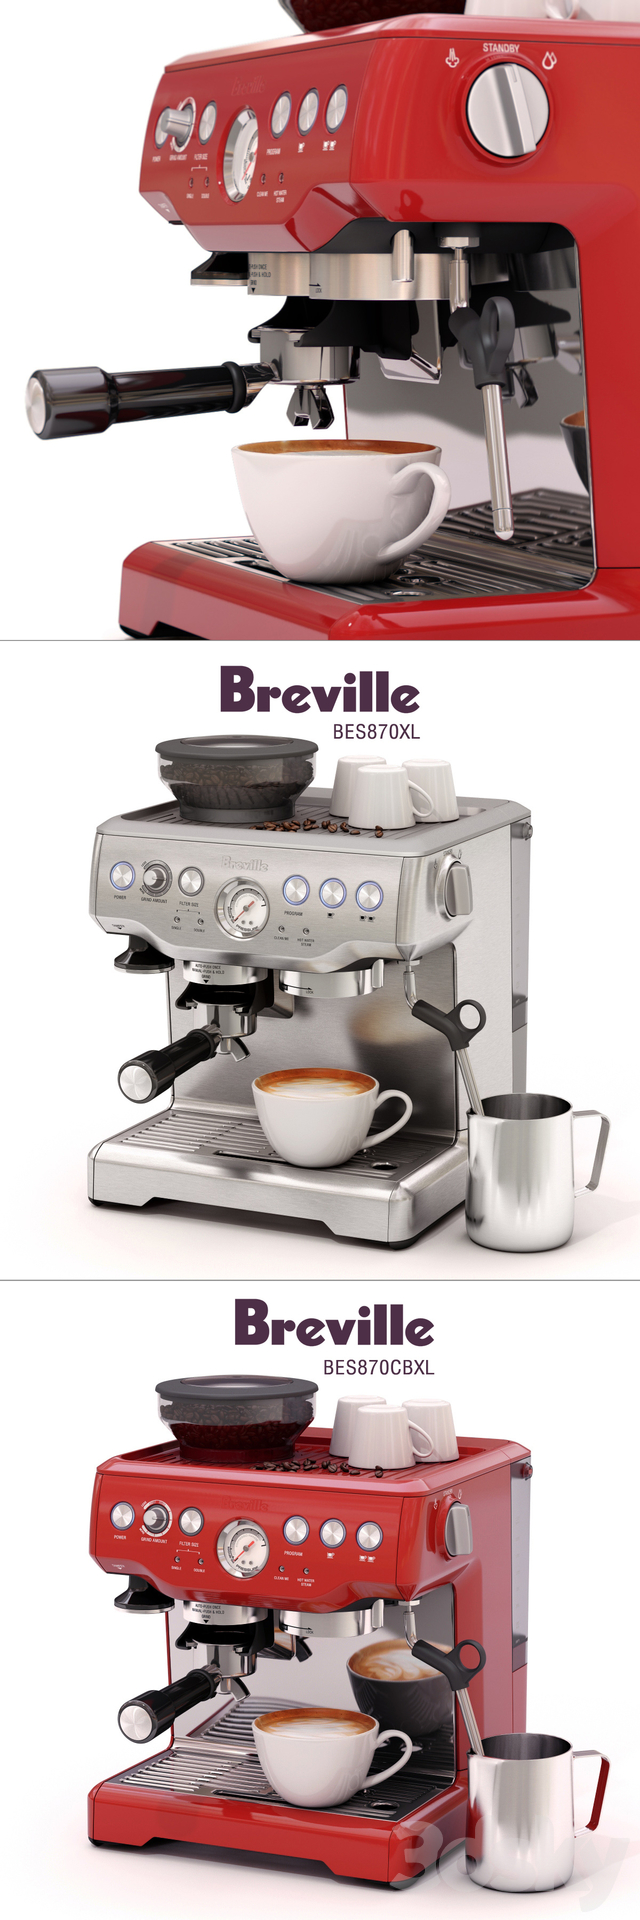 3d models: Kitchen appliance - Breville Barista Express